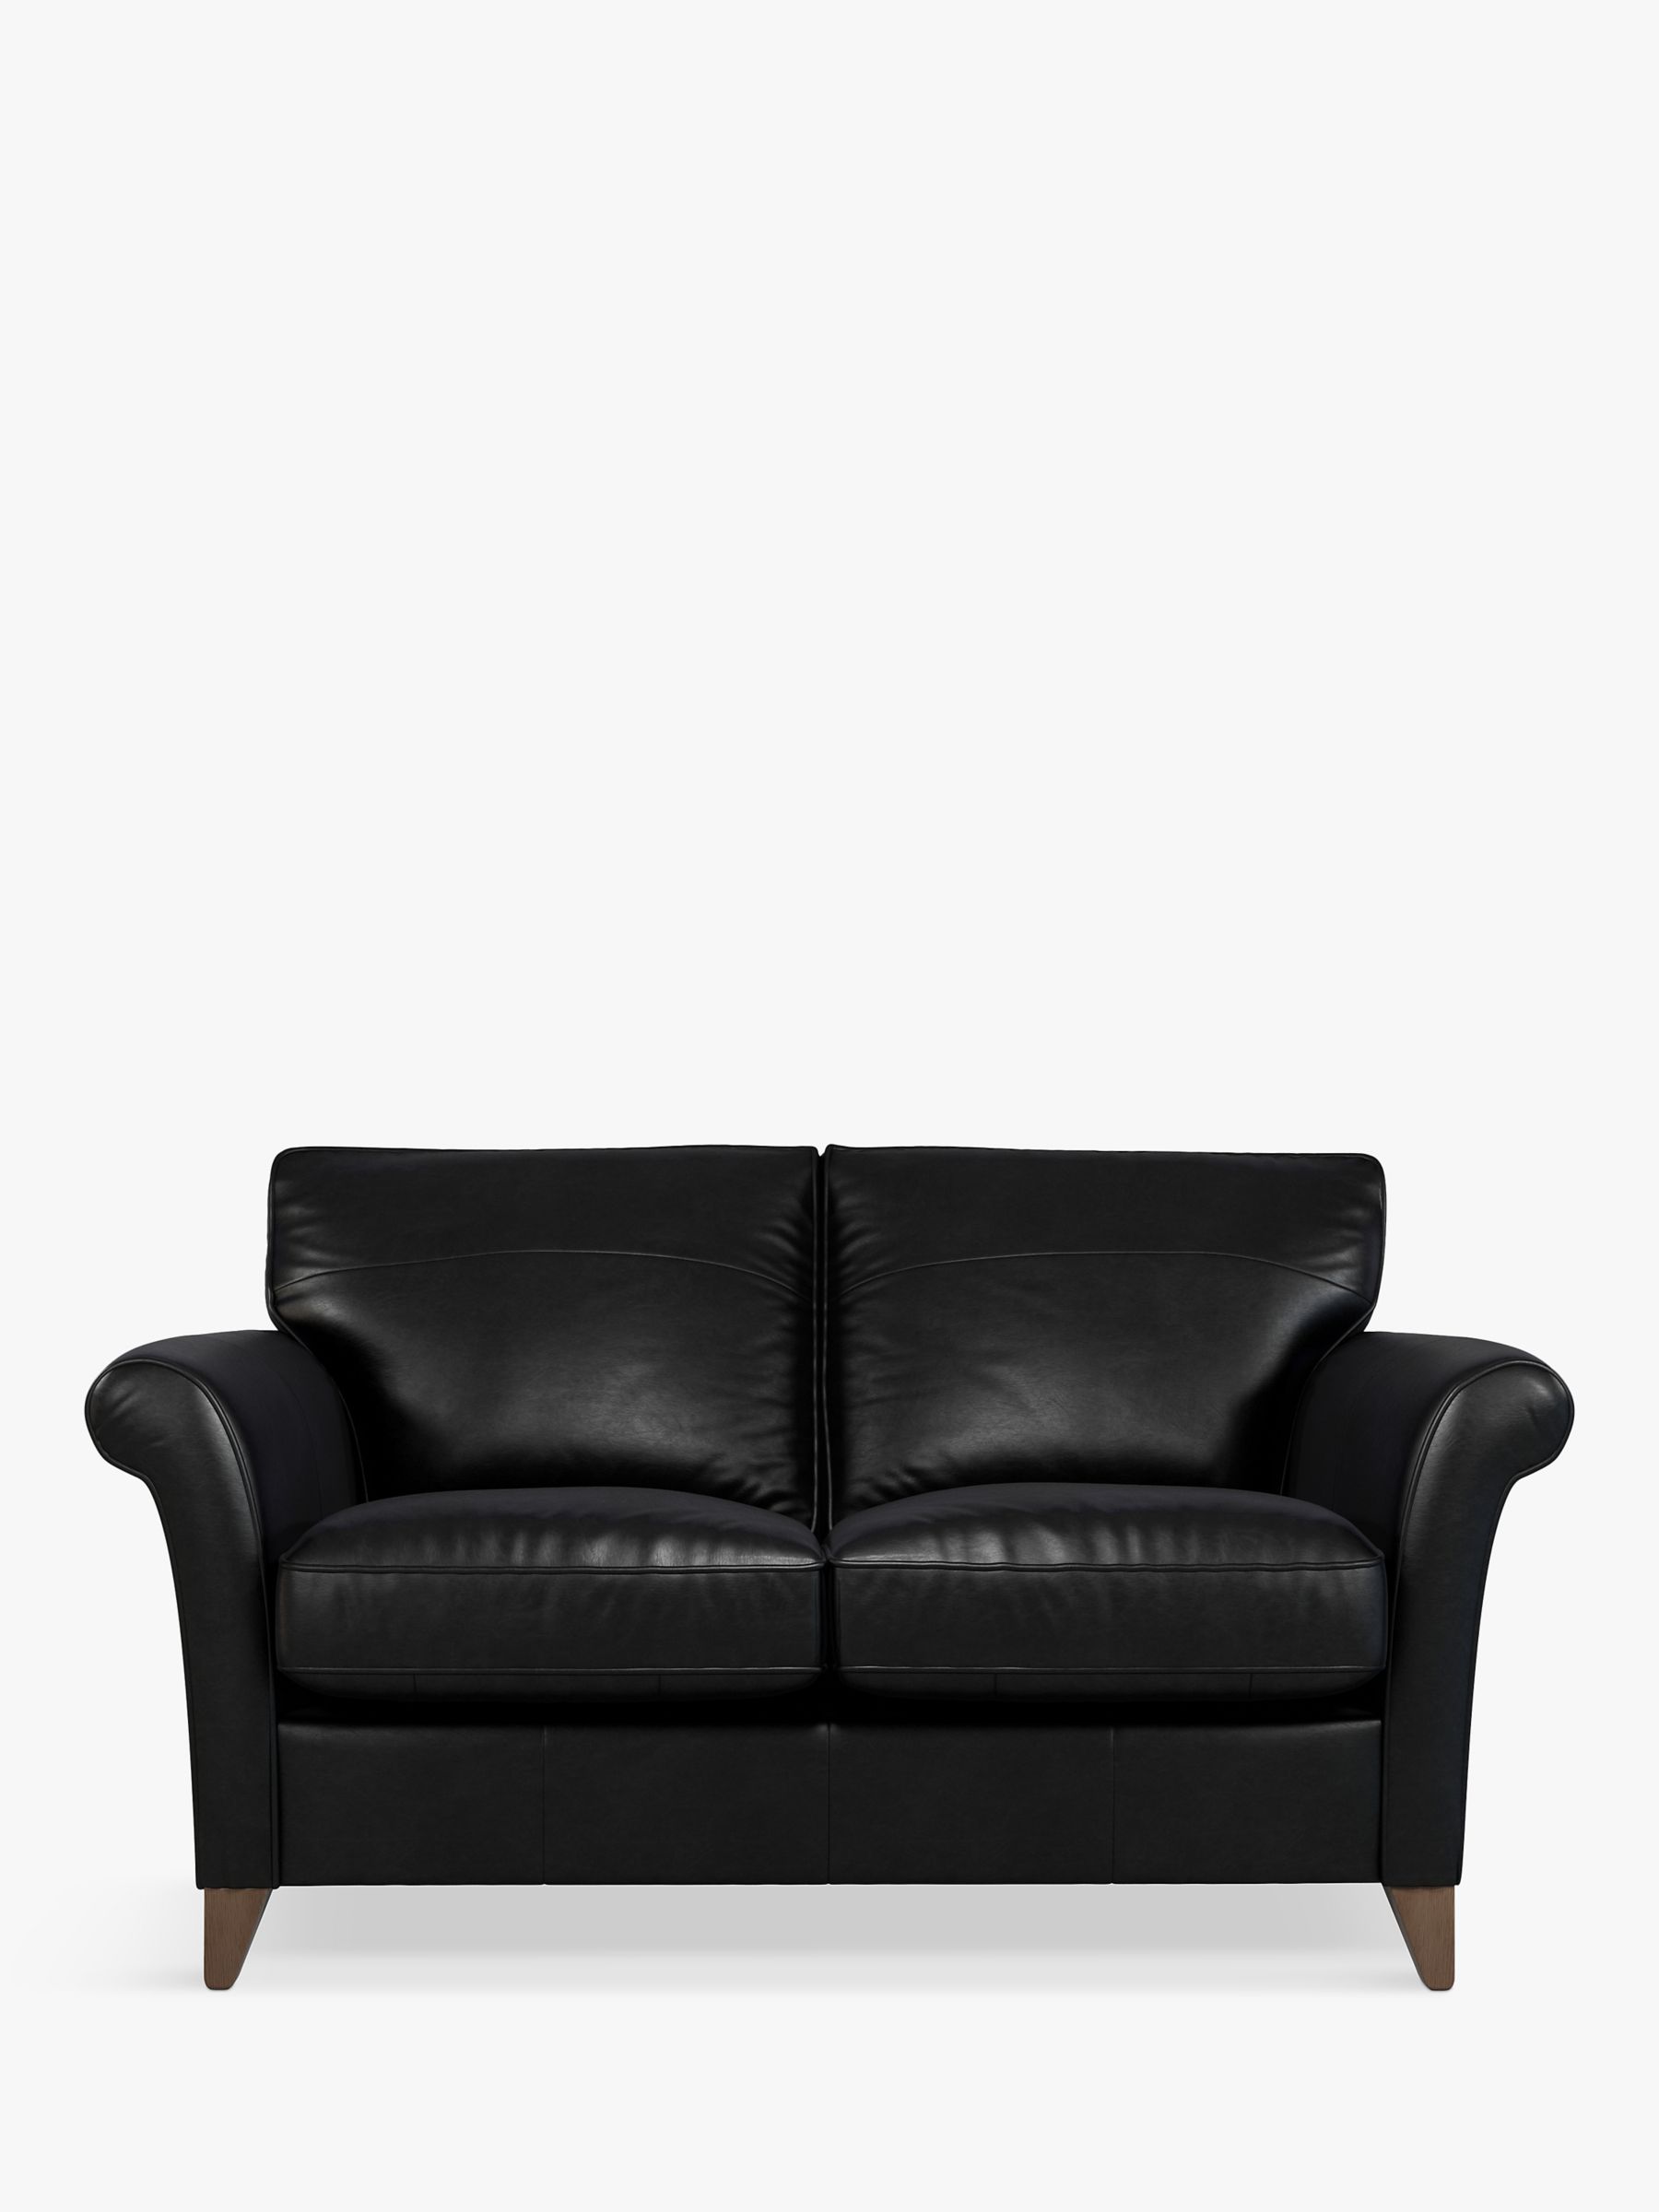 Charlotte Range, John Lewis Charlotte Small 2 Seater Leather Sofa, Dark Leg, Piccadilly Black